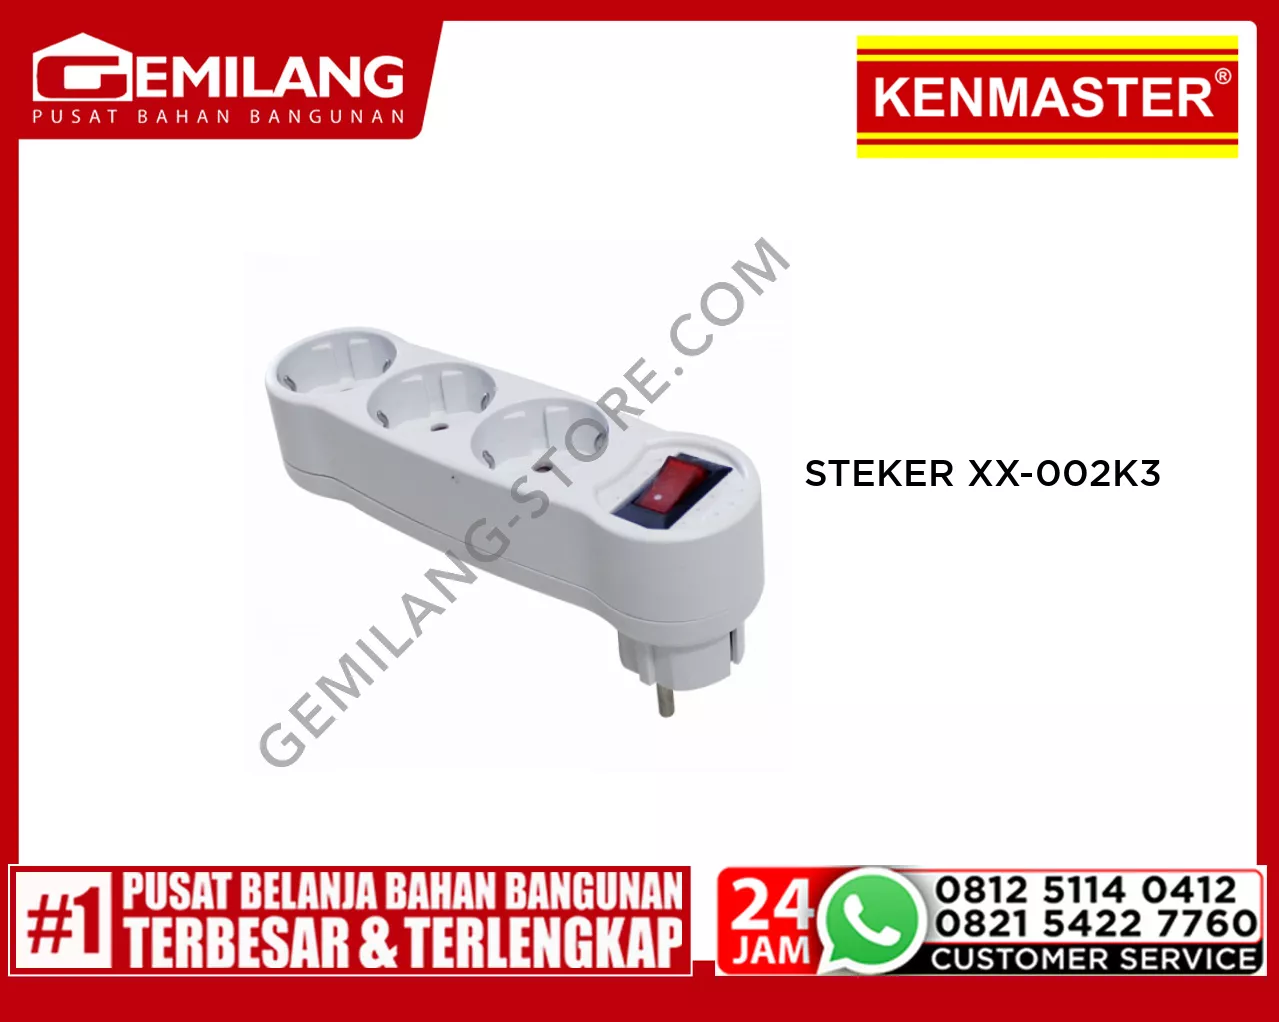 KENMASTER STEKER XX-002K3